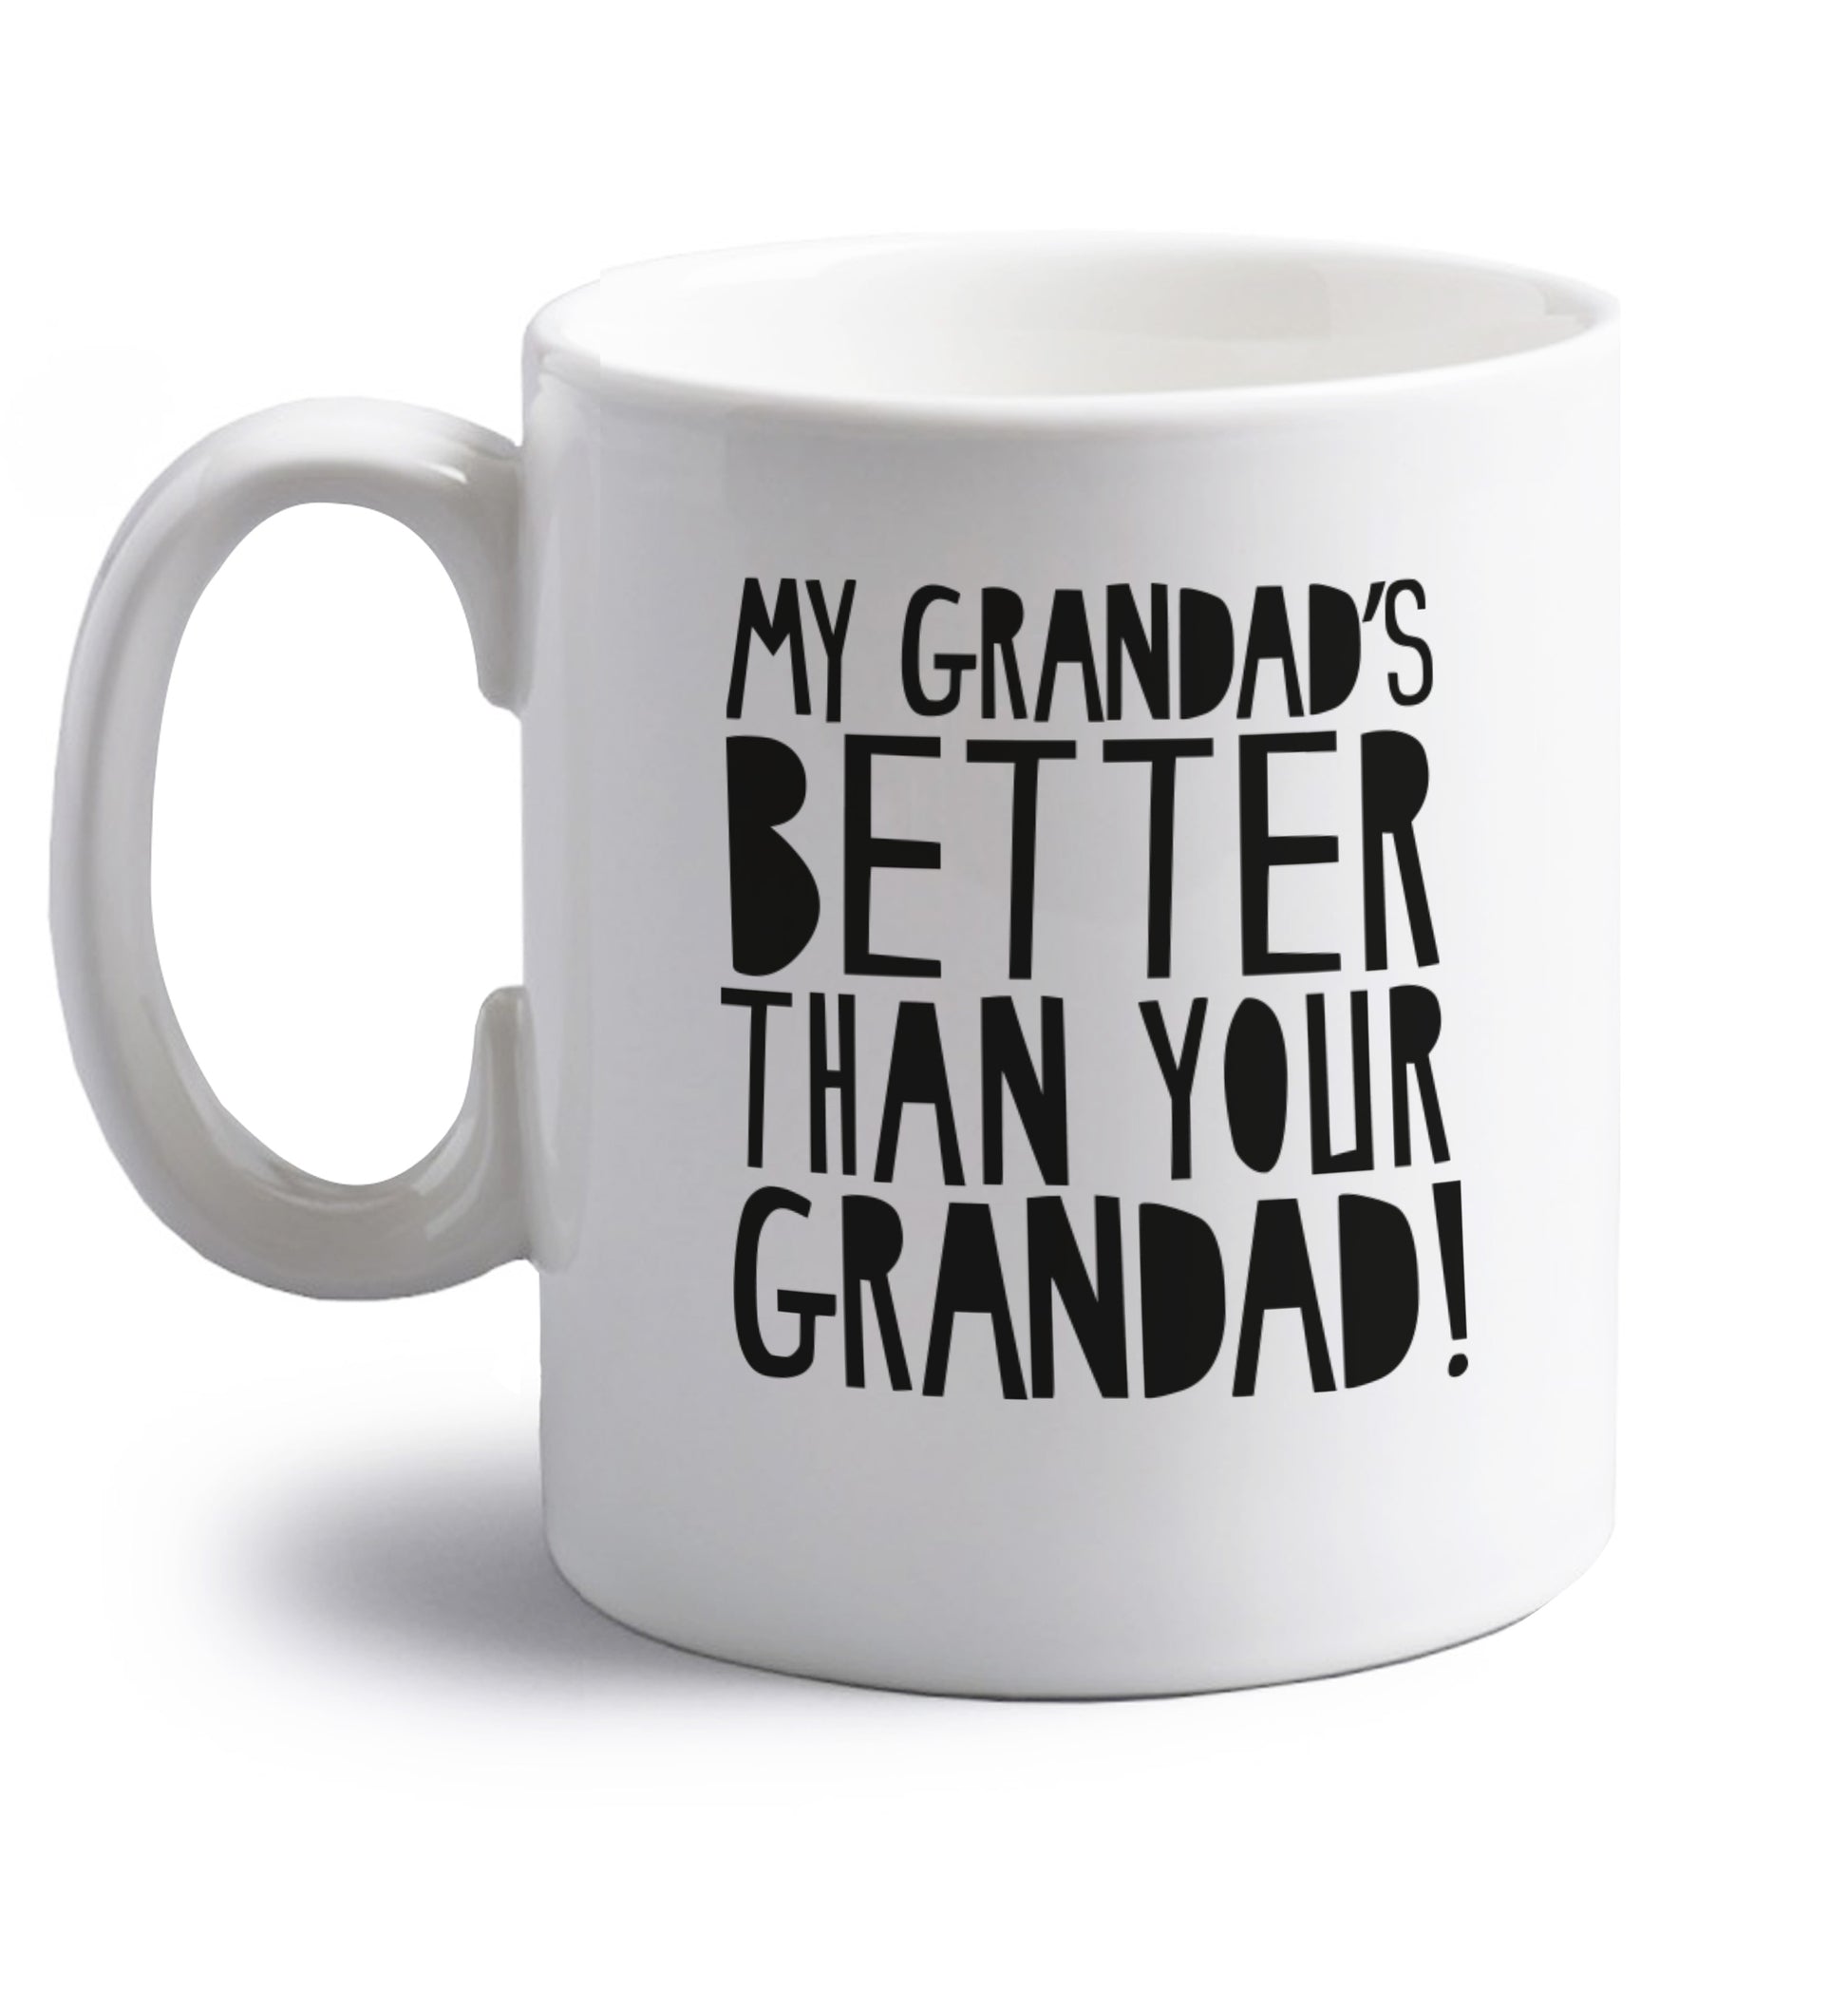 My Grandad's better than your grandad right handed white ceramic mug 